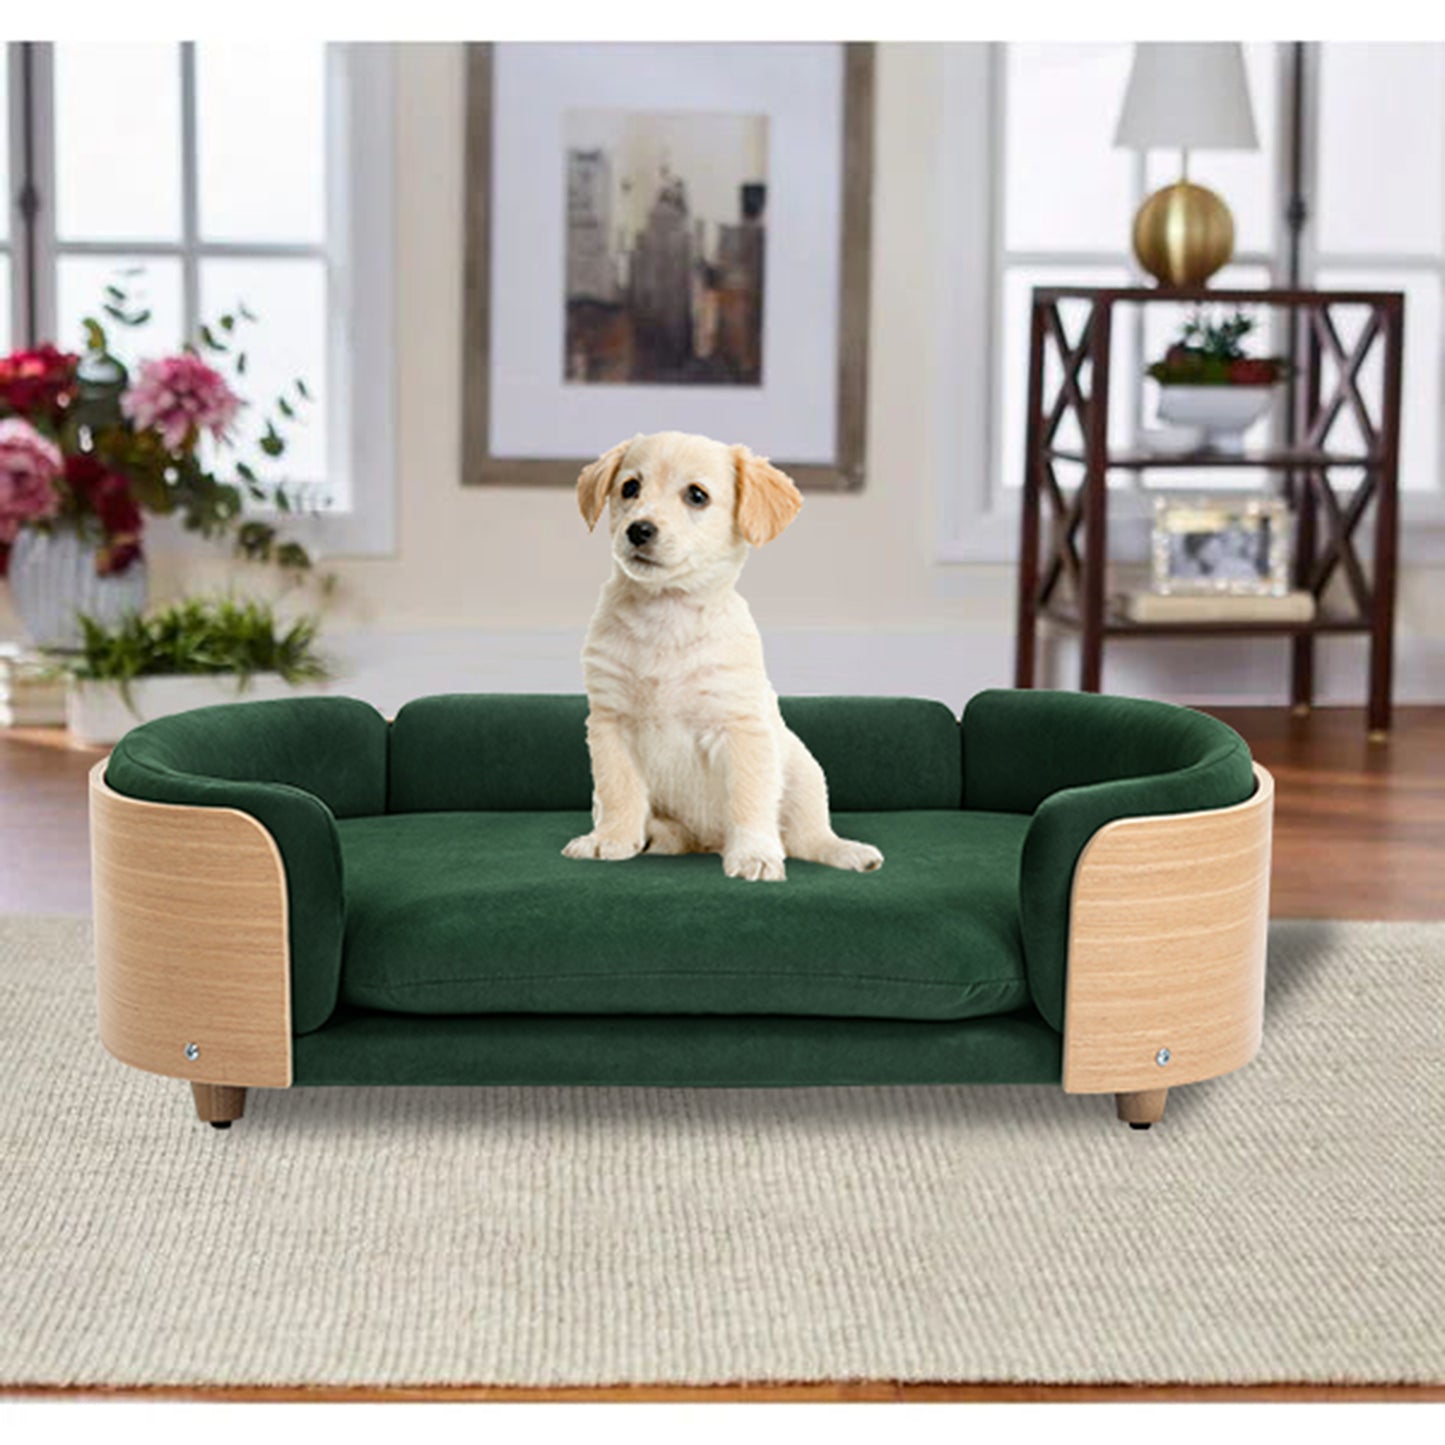 CHOTTO PET's - Fuwa Pet Sofa - Large Green